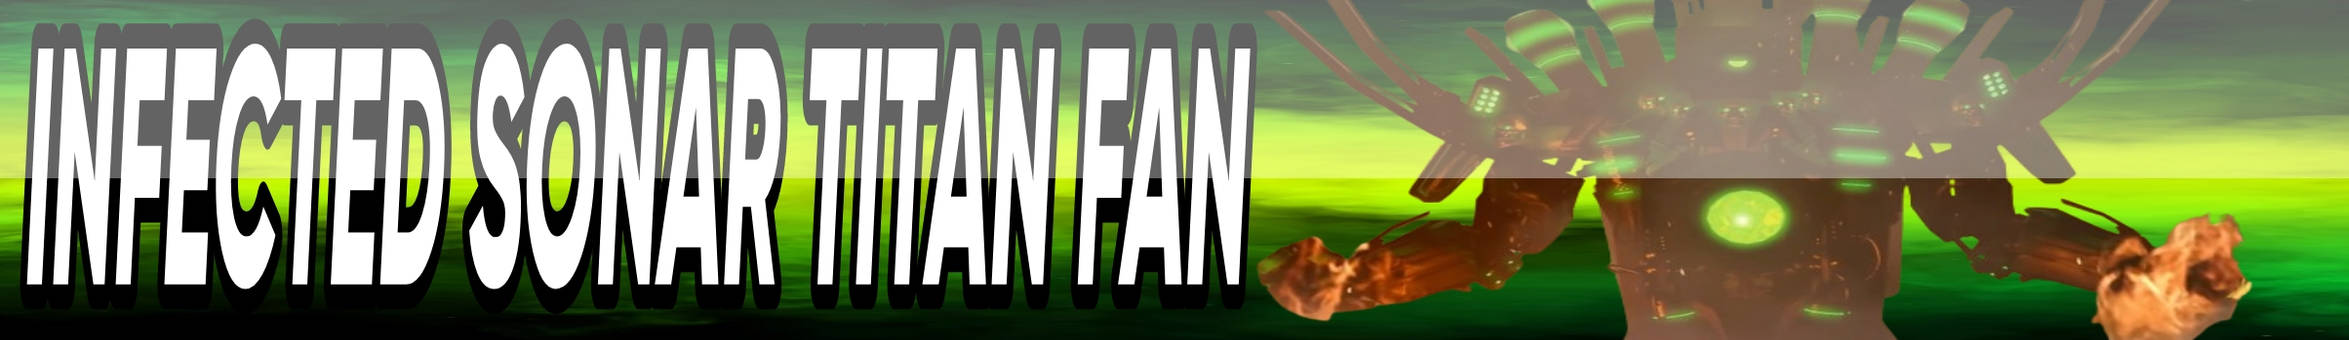 Infected Sonar Titan Fan Button Stamp by SuperSkibidiToiletTV on DeviantArt